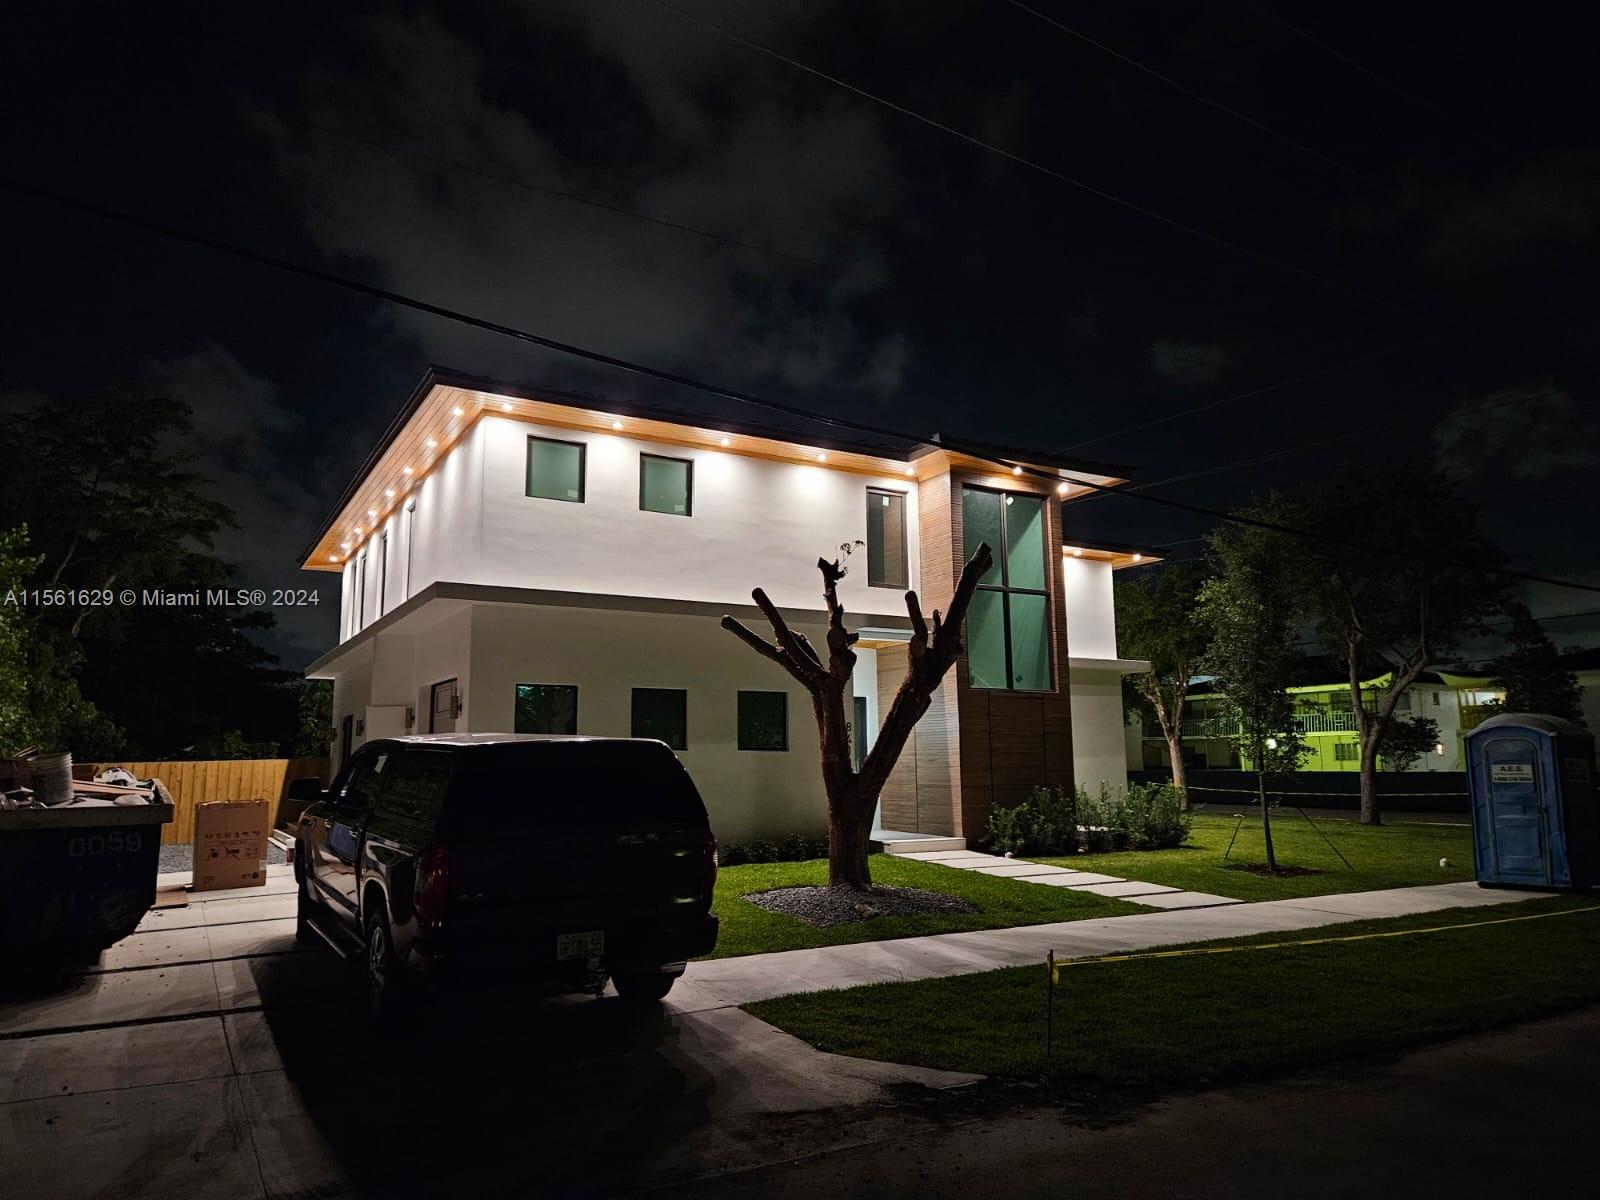 View South Miami, FL 33143 house